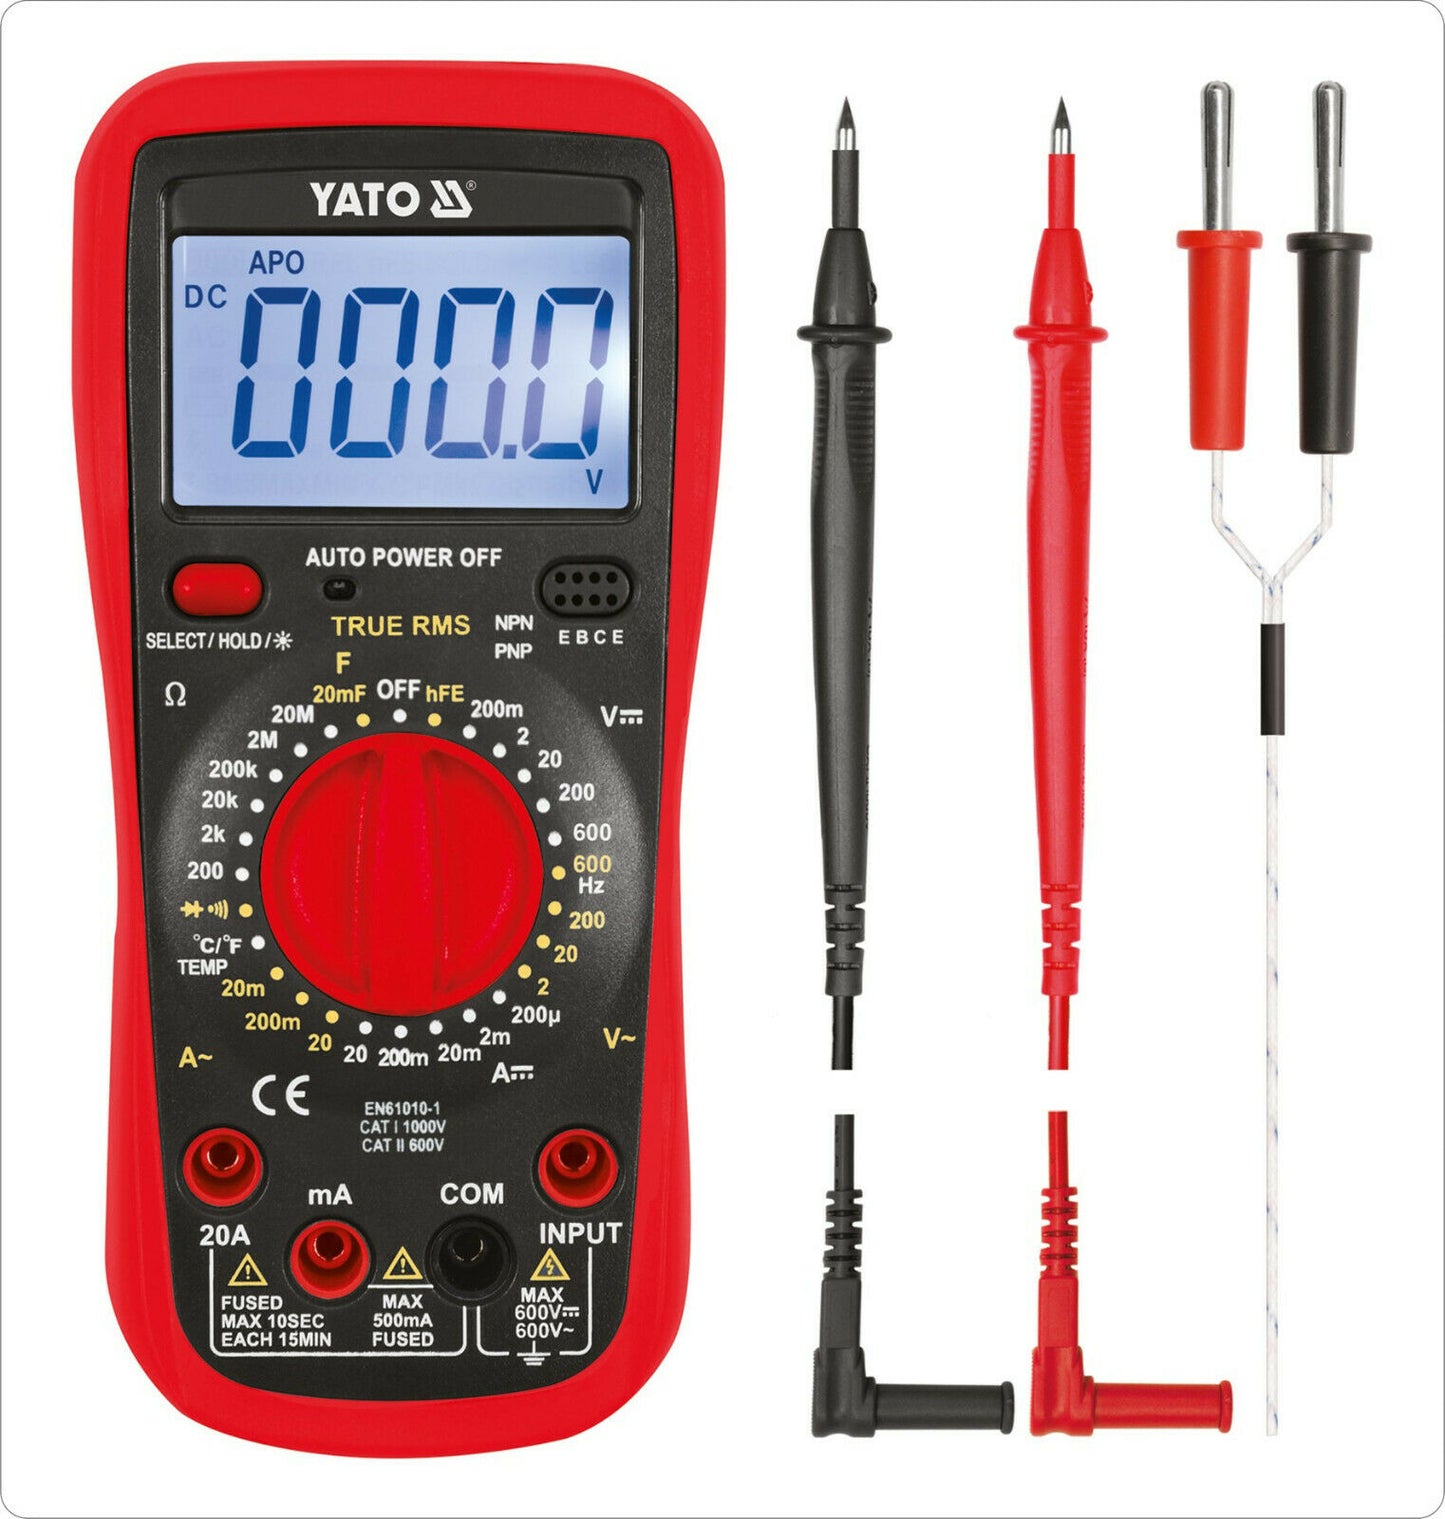 YATO YT-73083 Digitales Messgerät Multimeter Strommesser Spannungsmessgerät